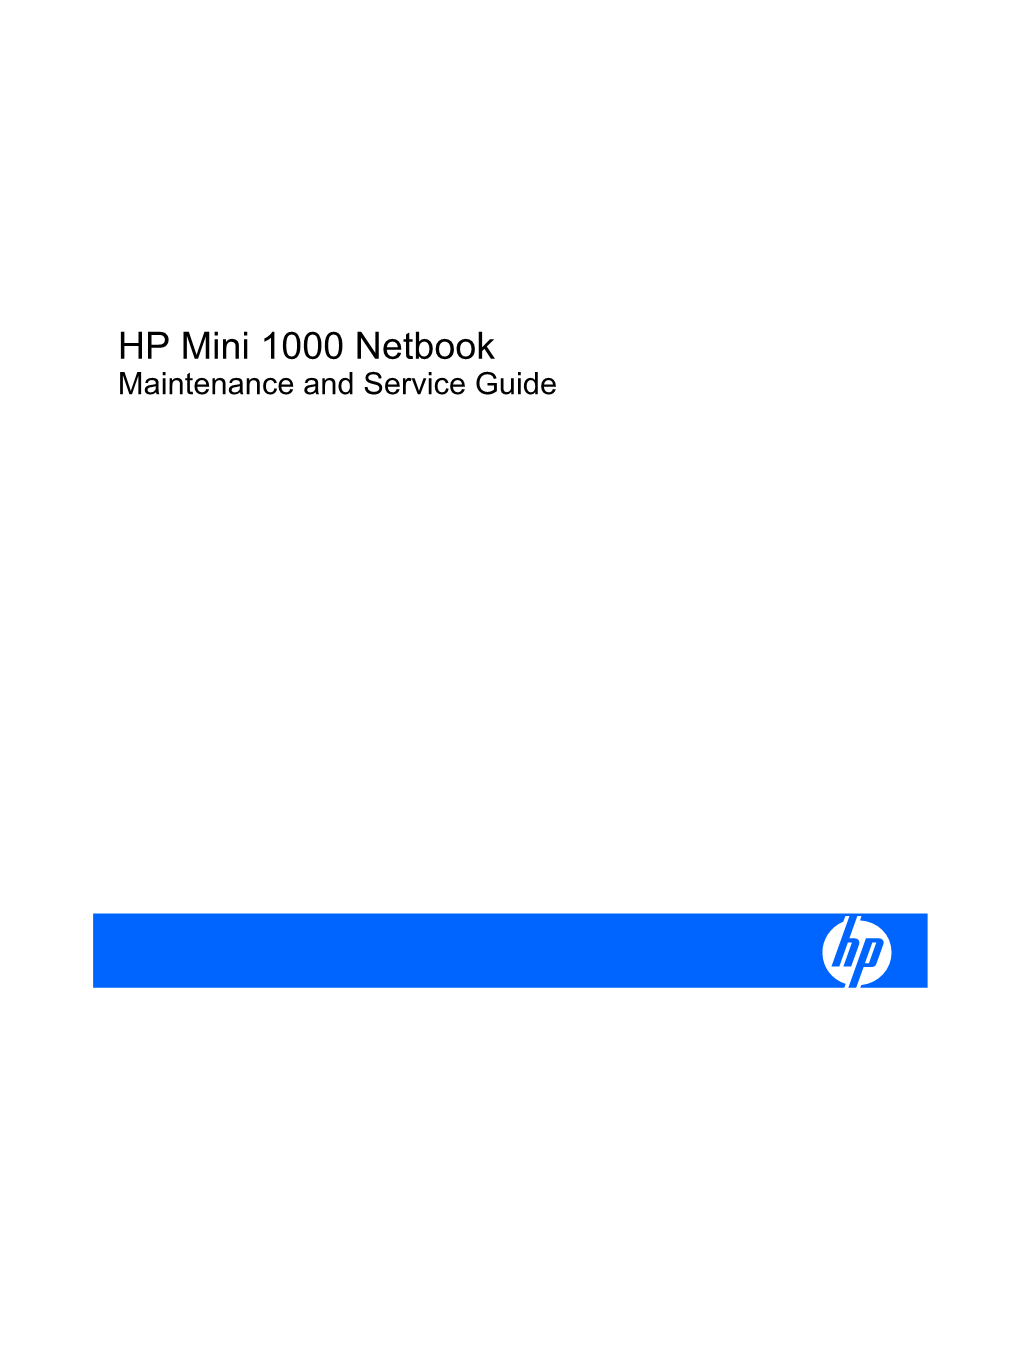 HP Mini 1000 Netbook Maintenance and Service Guide © Copyright 2009 Hewlett-Packard Development Company, L.P